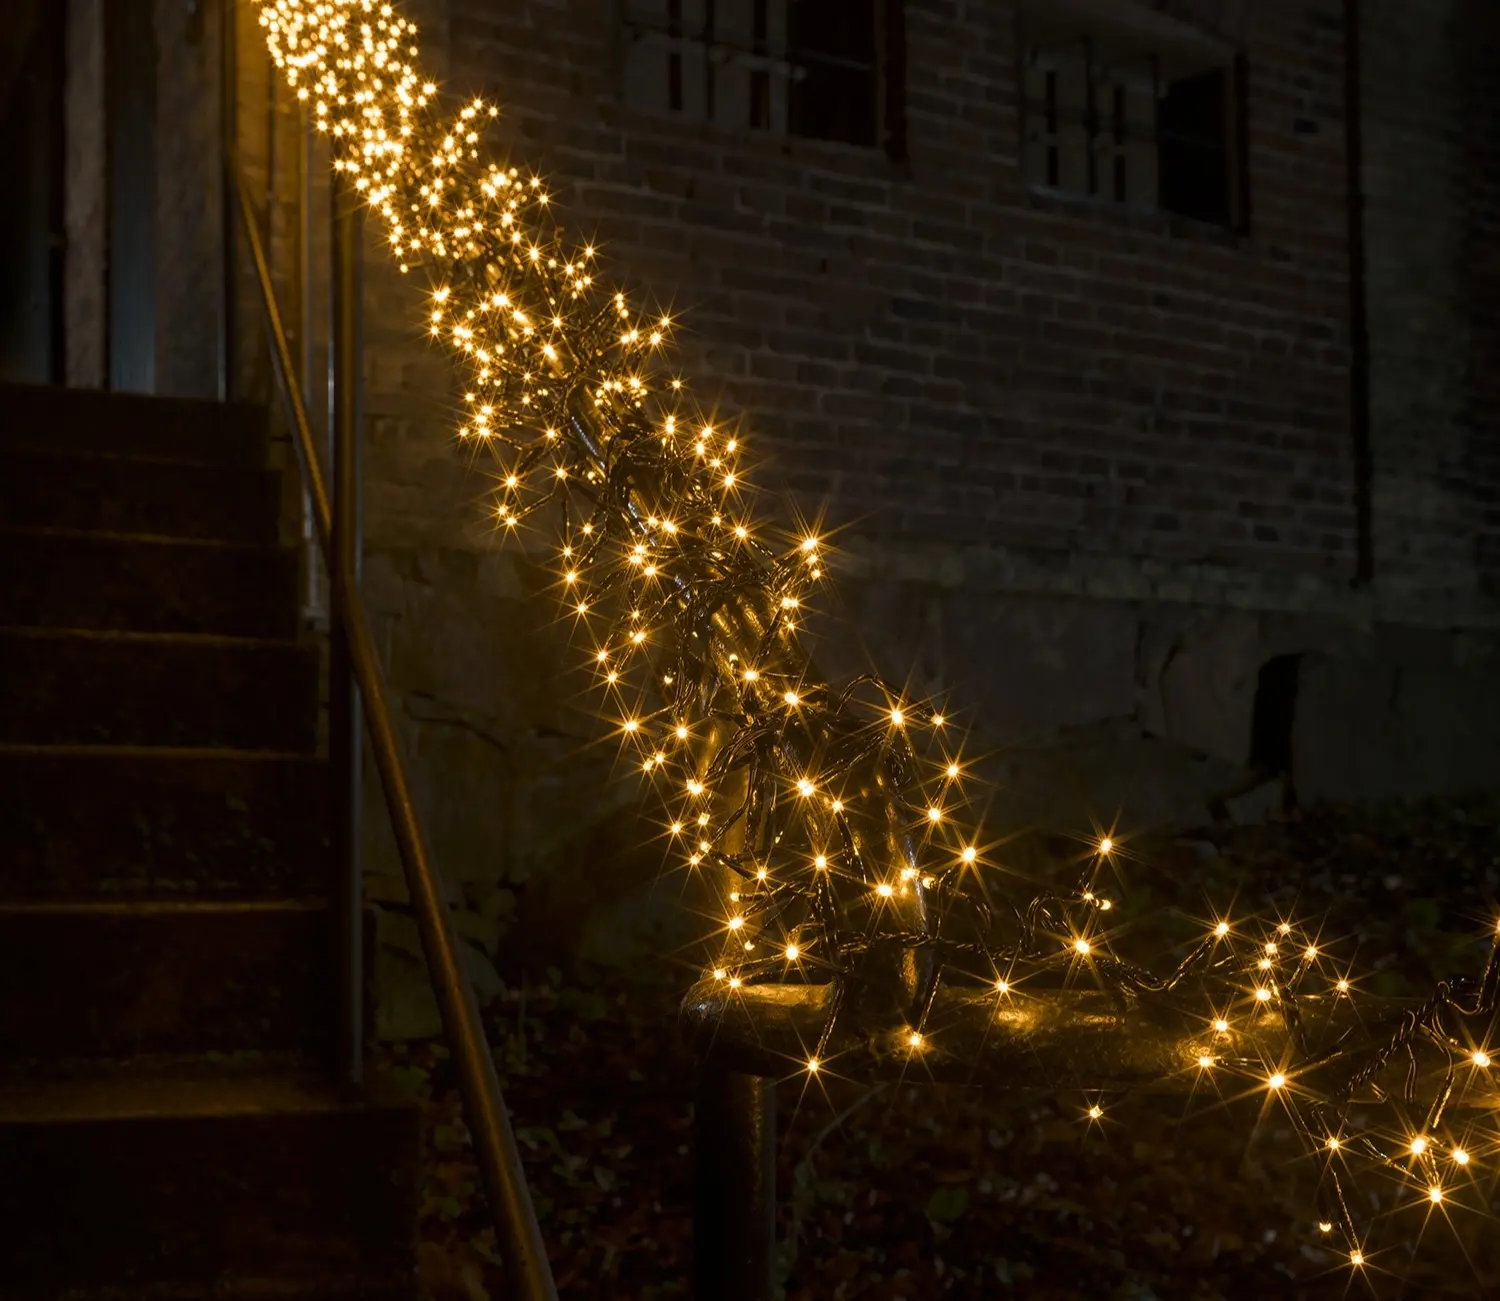 Konstsmide Amber LED Cluster Christmas Lights